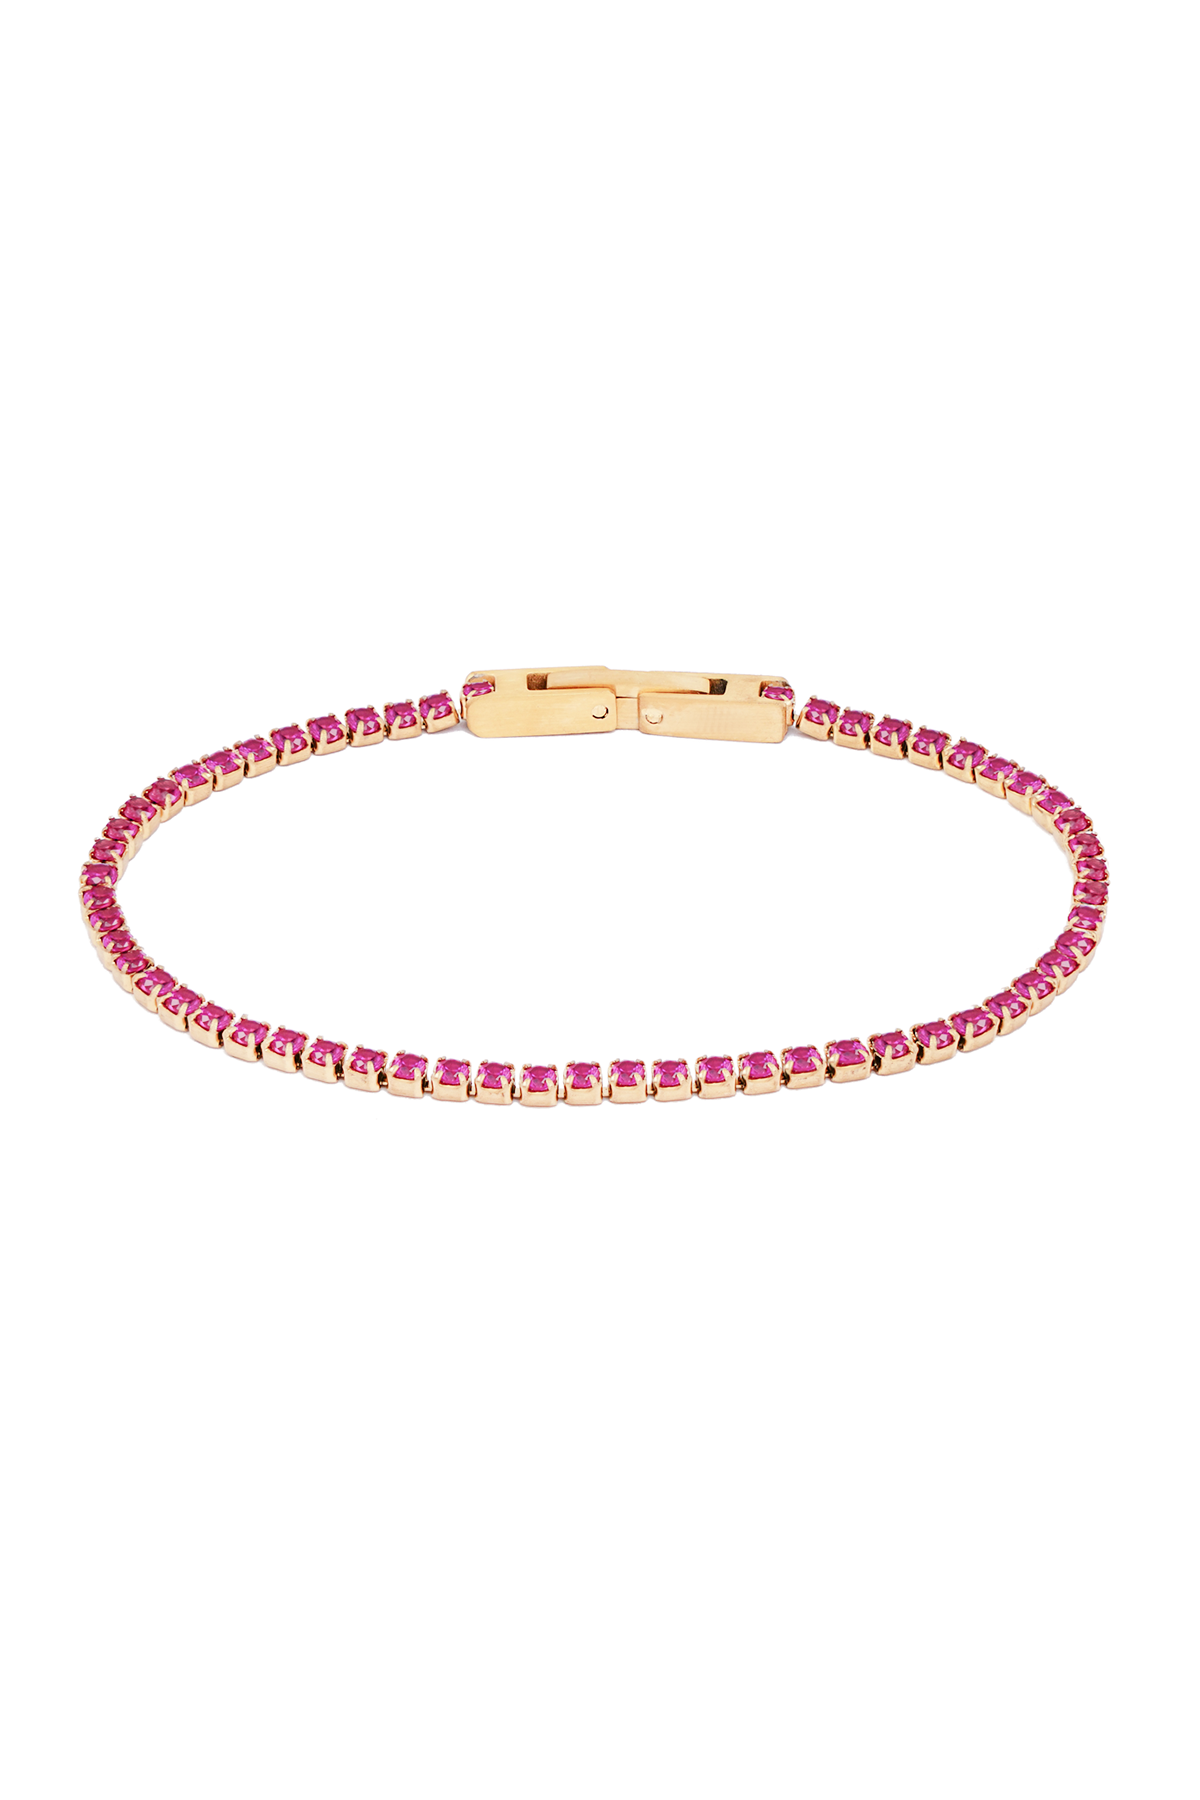 Tennis bracelet, Hot pink